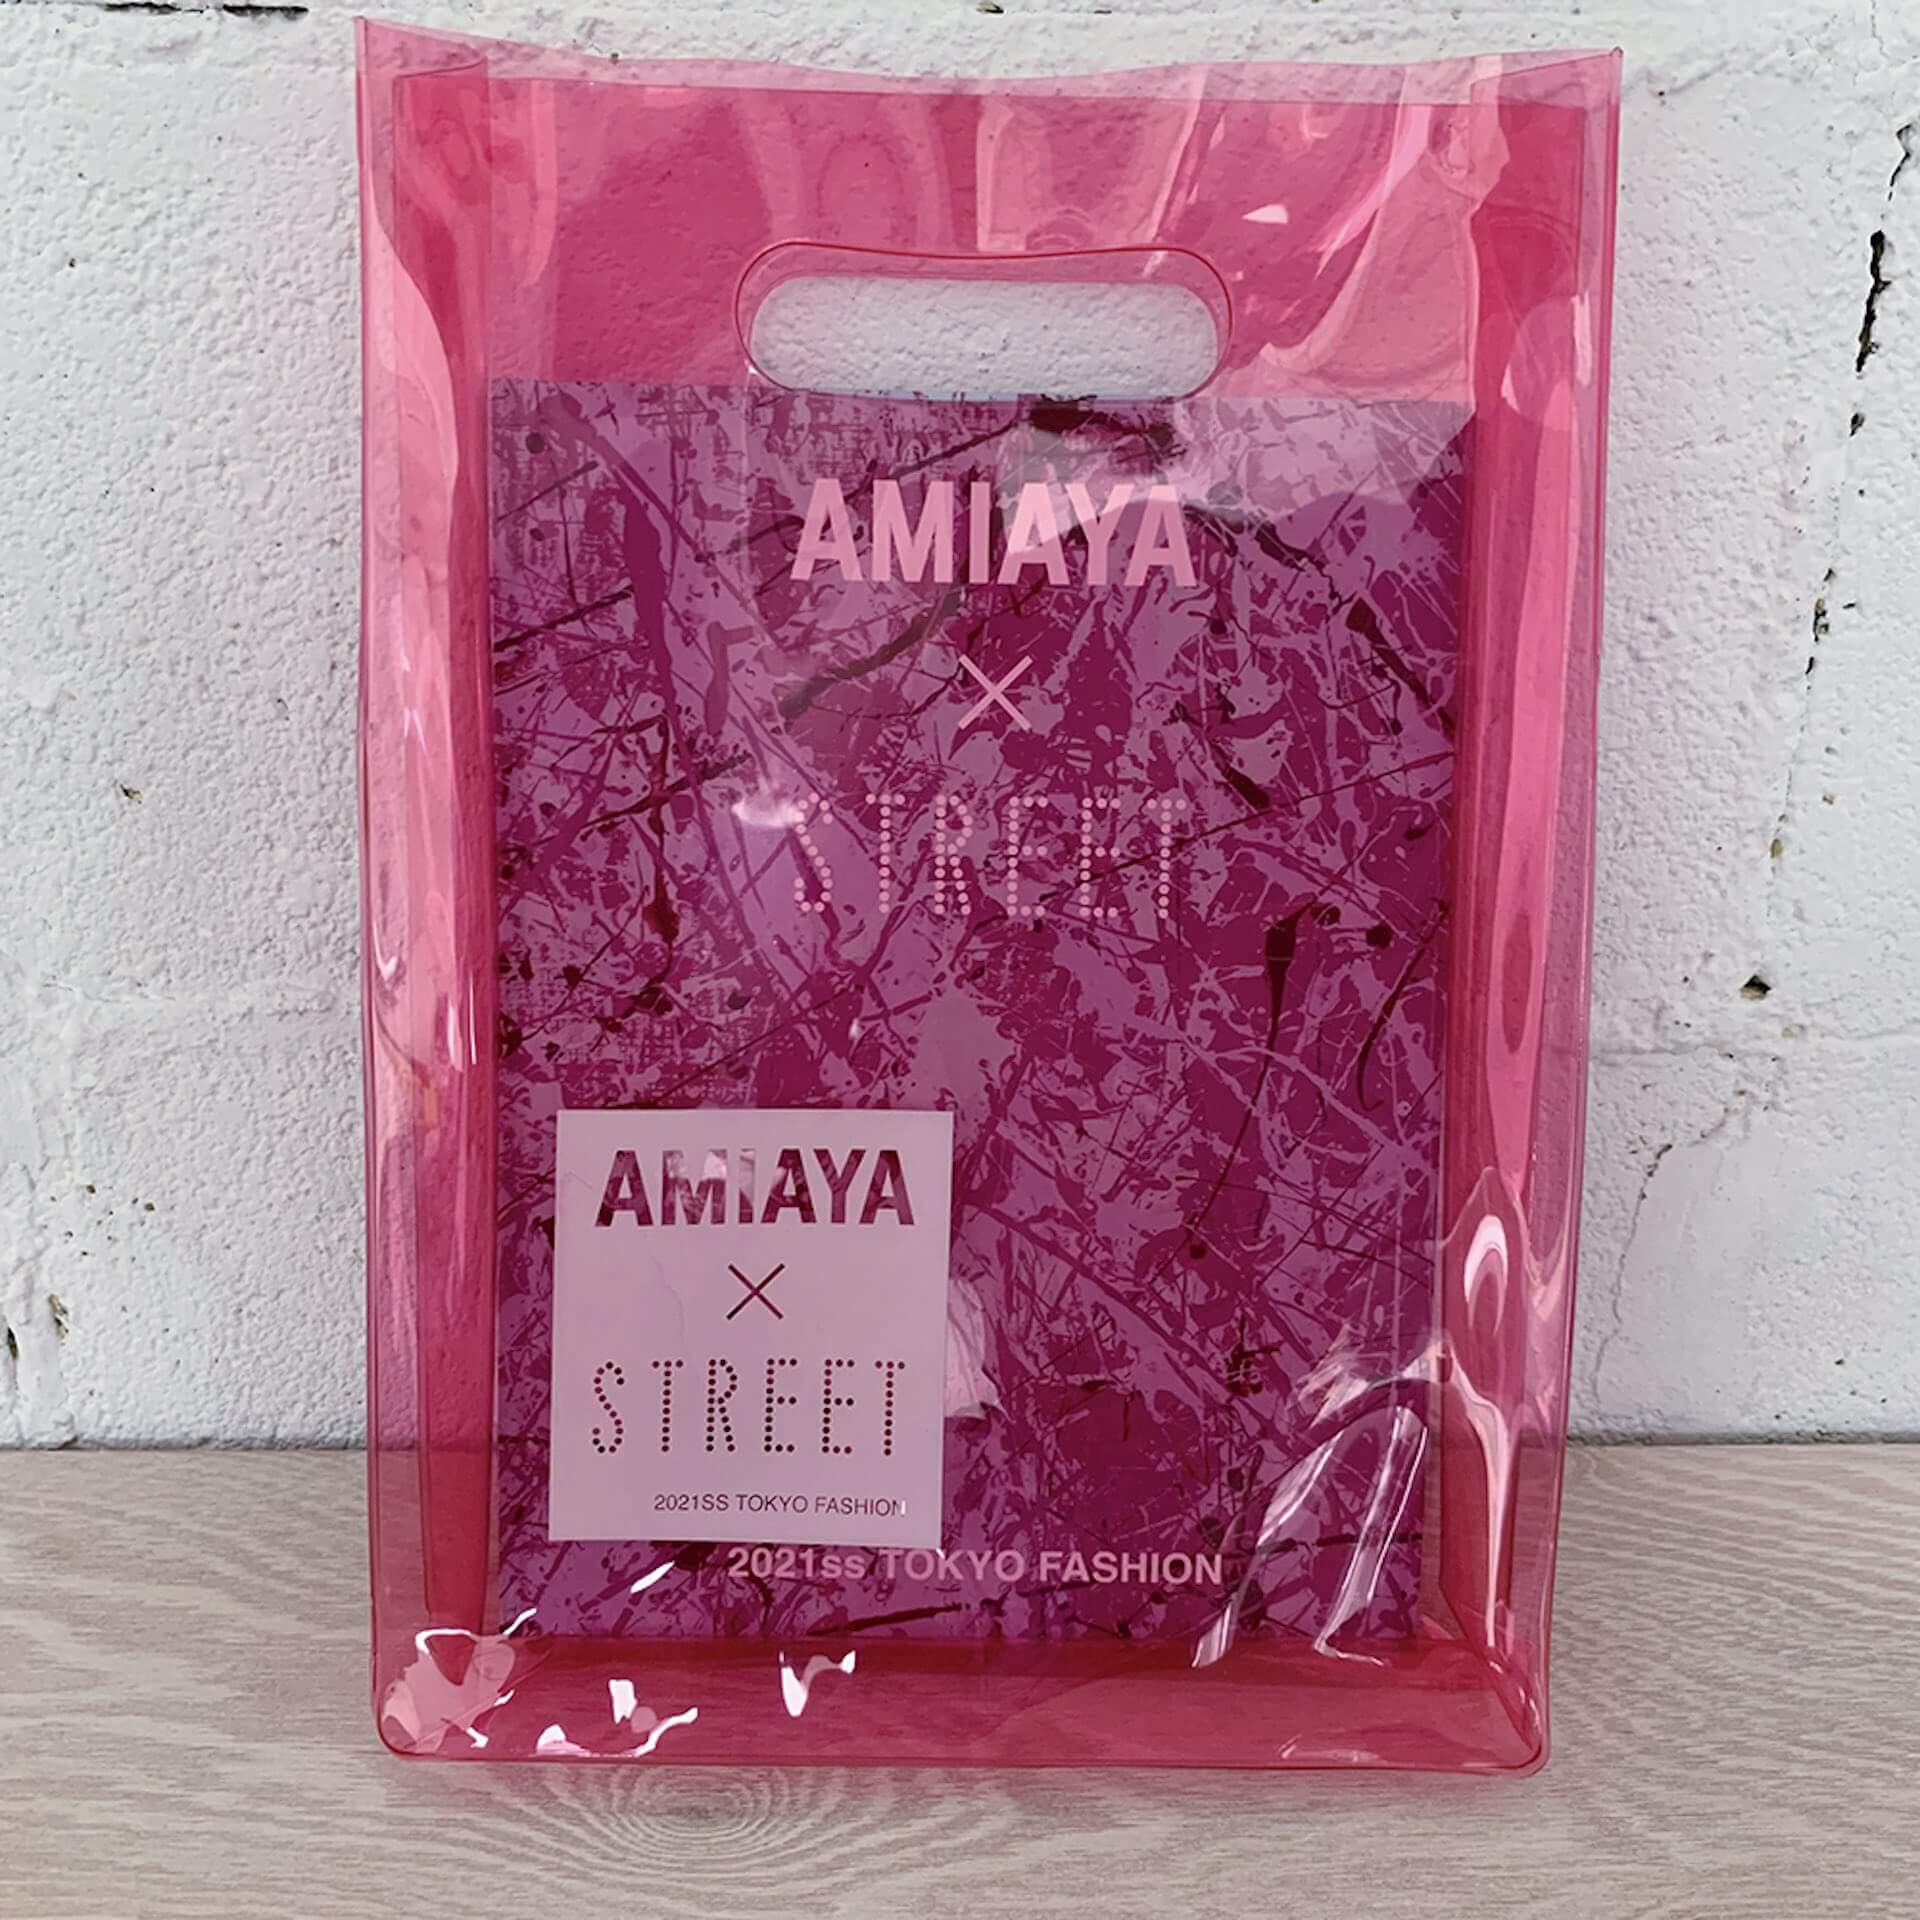 AMIAYAとストリートスナップ誌「STREET」がコラボレーション！写真集『AMIAYA × STREET TOKYO FASHION 2021ss』を発行 fashion210819_amiaya_street_2